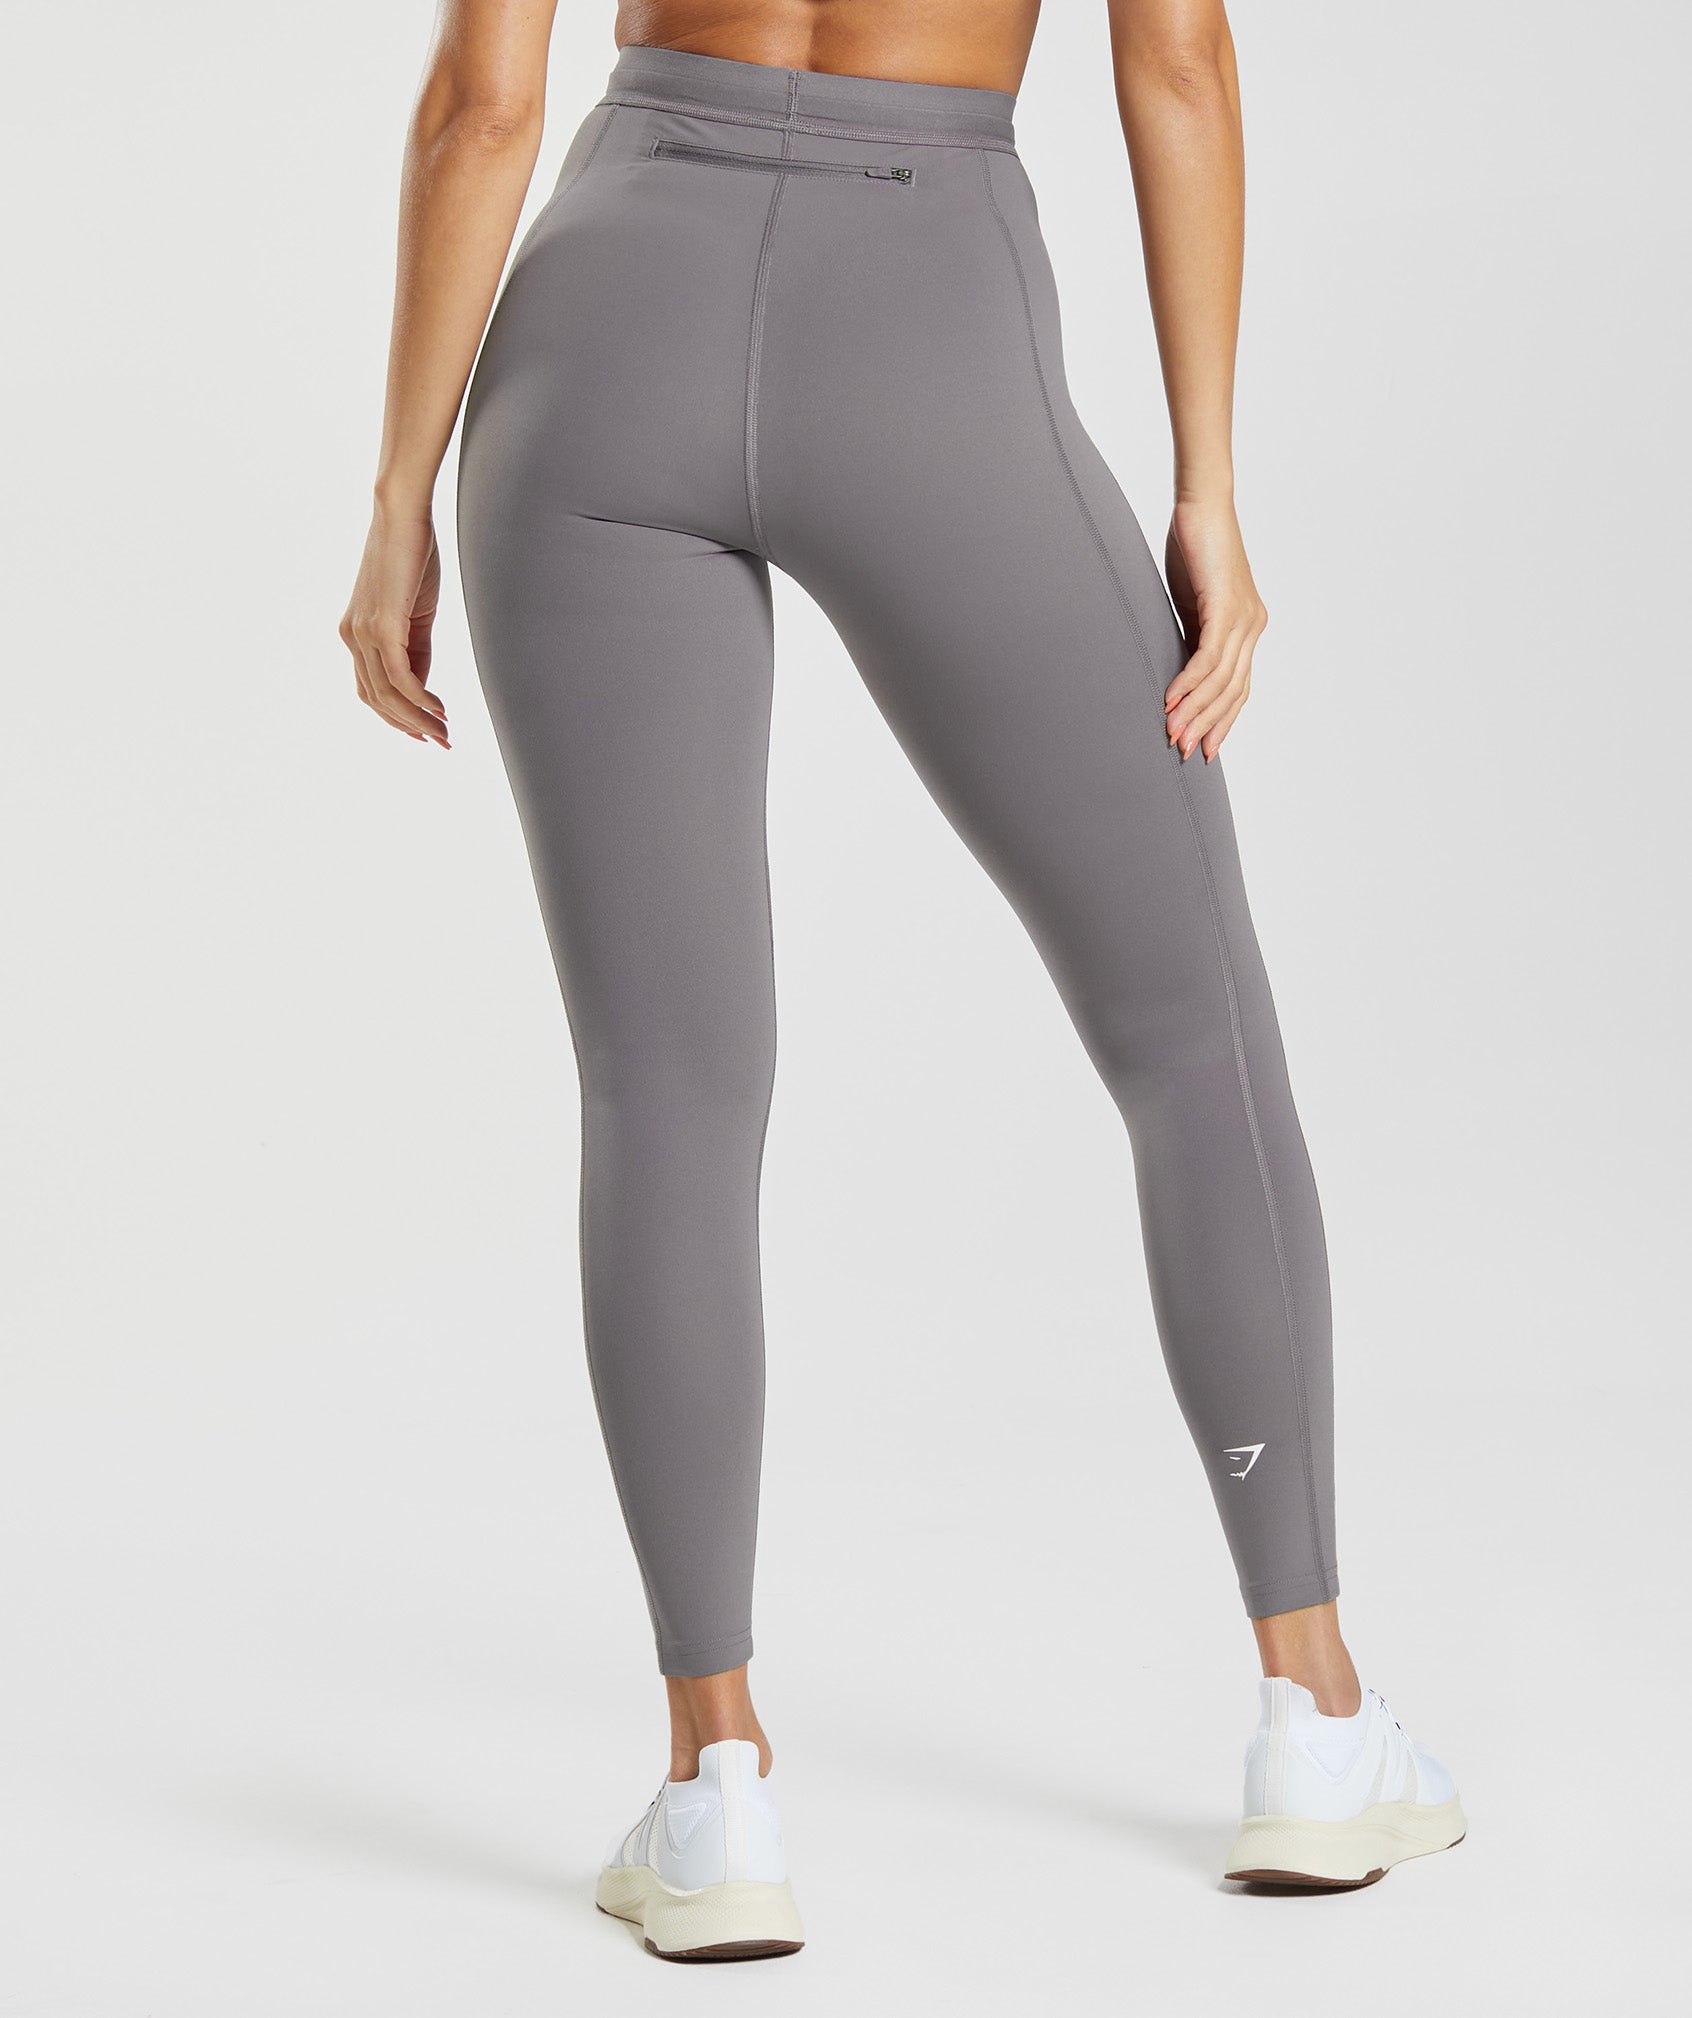 Legging Storm Grey  RectoVerso premium activewear for women - RectoVerso  Sports